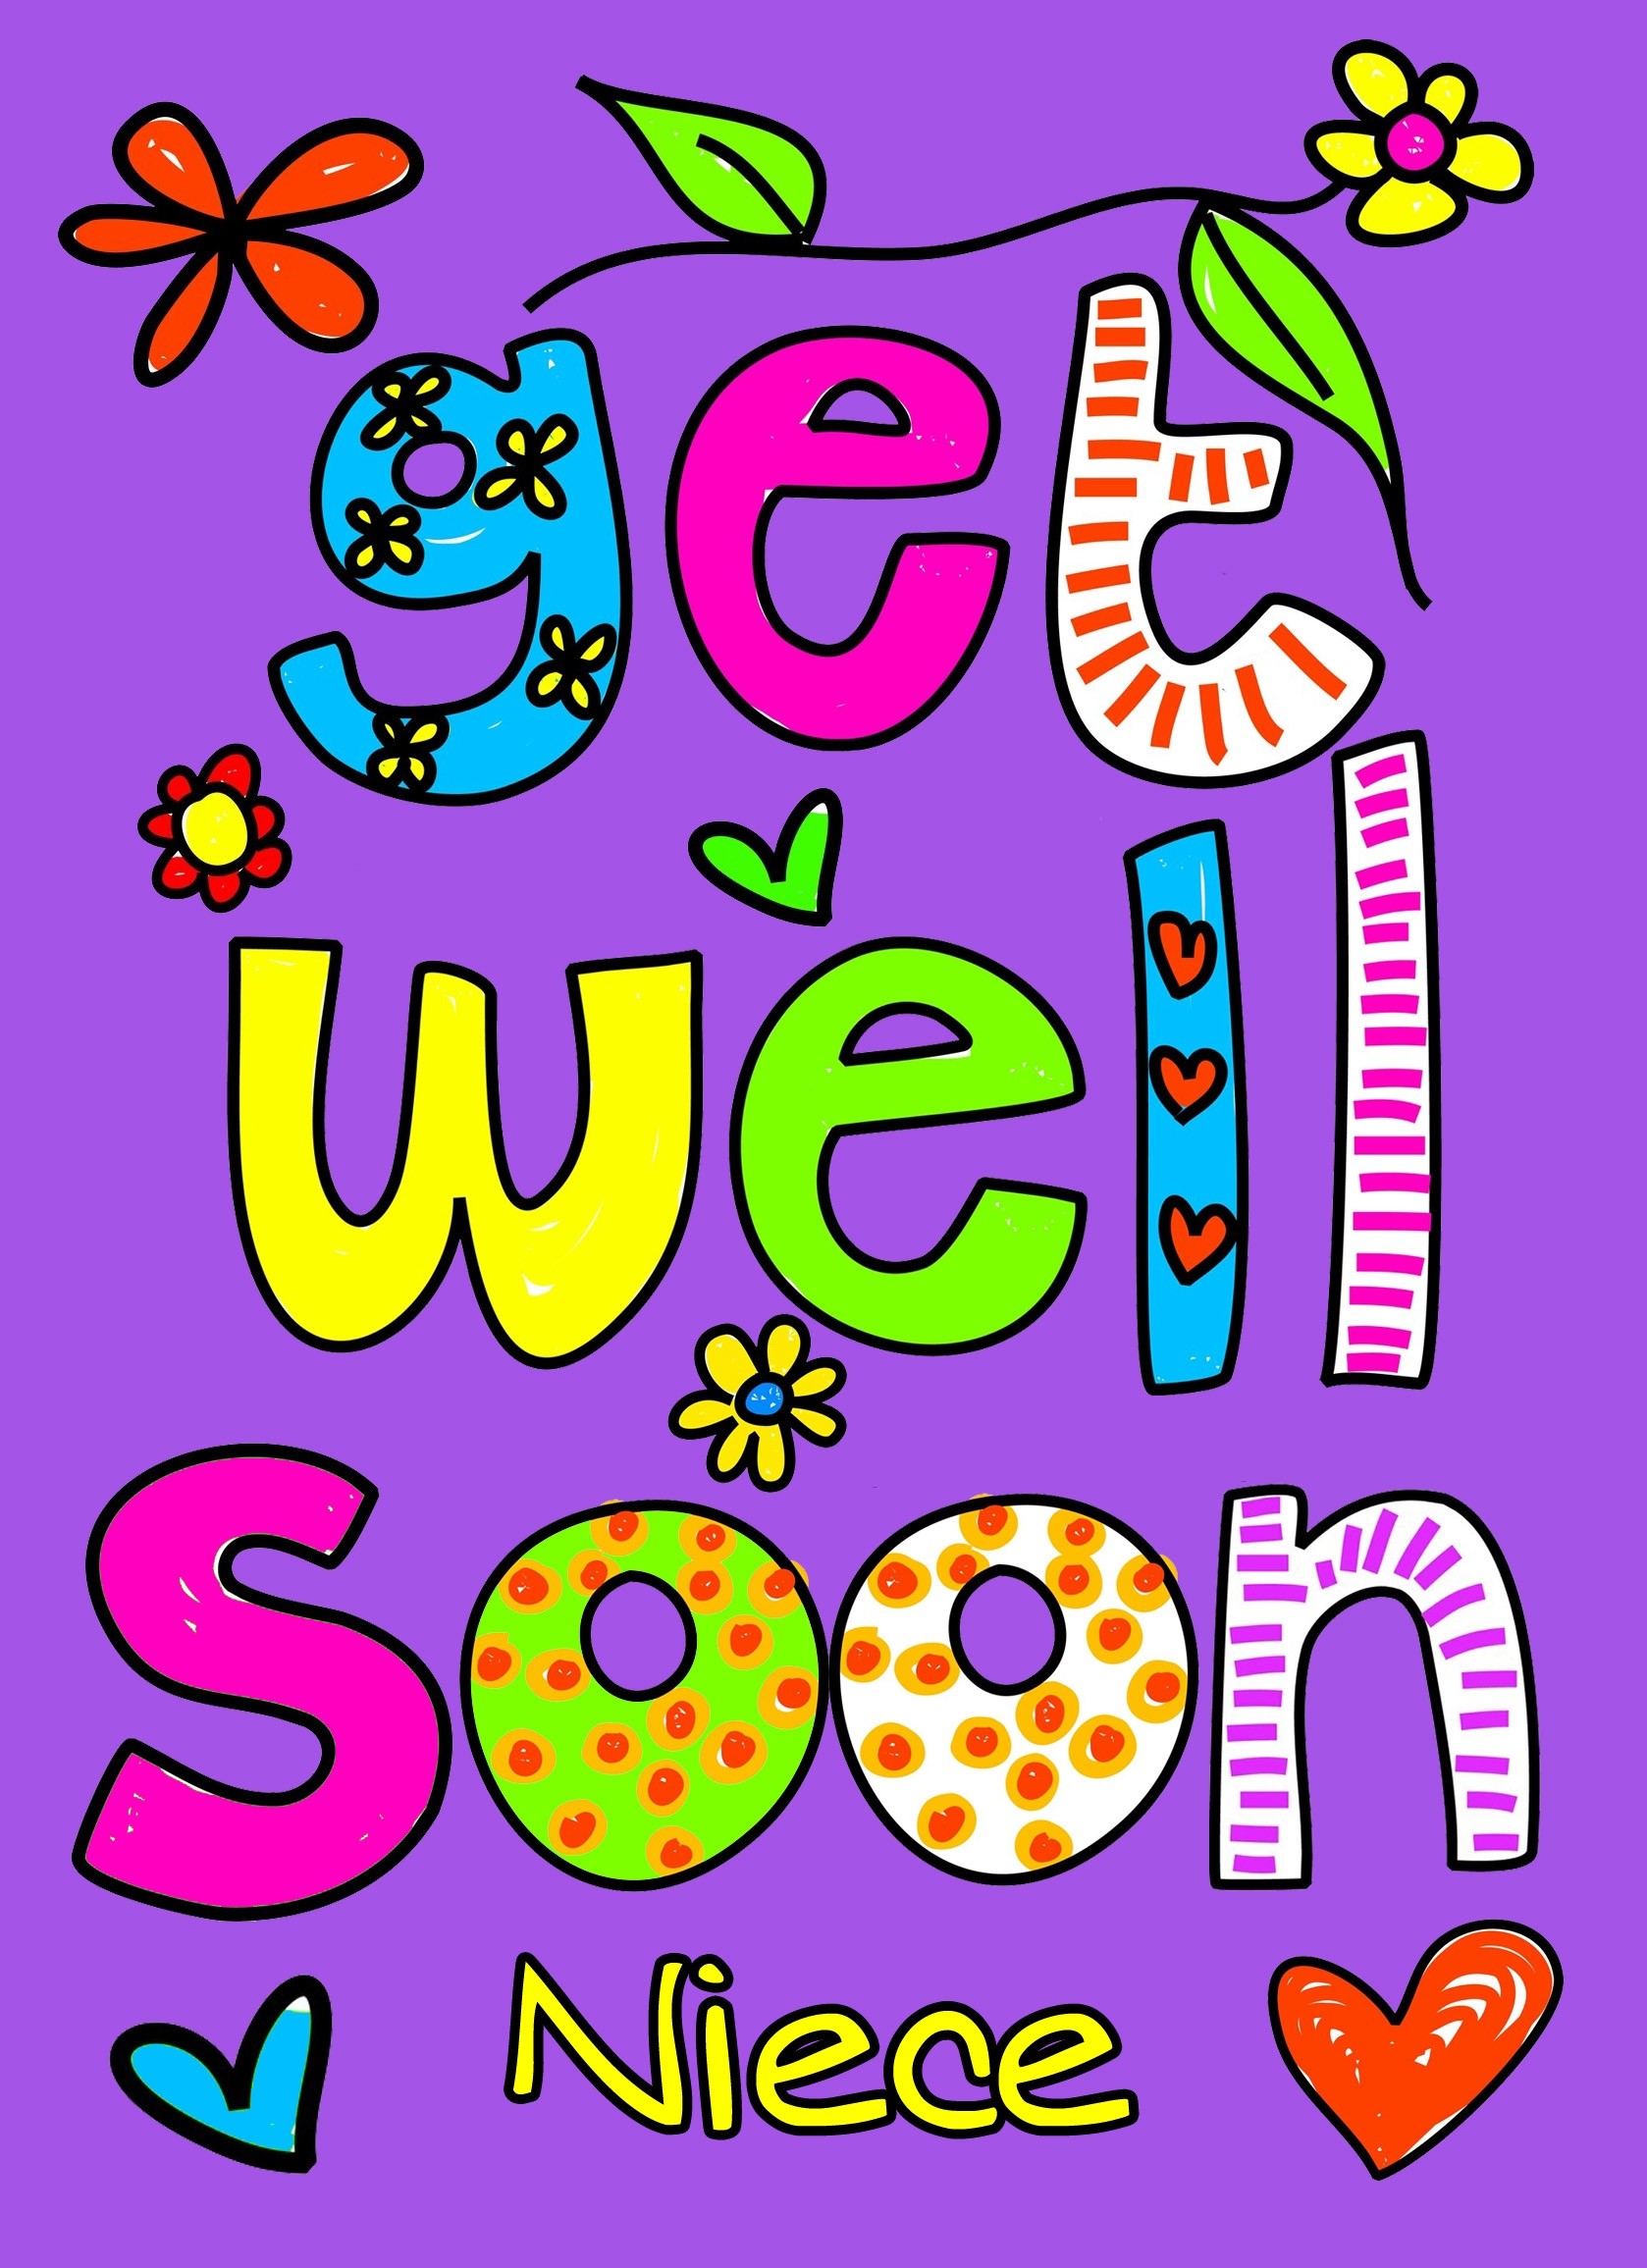 Get Well Soon 'Niece' Greeting Card